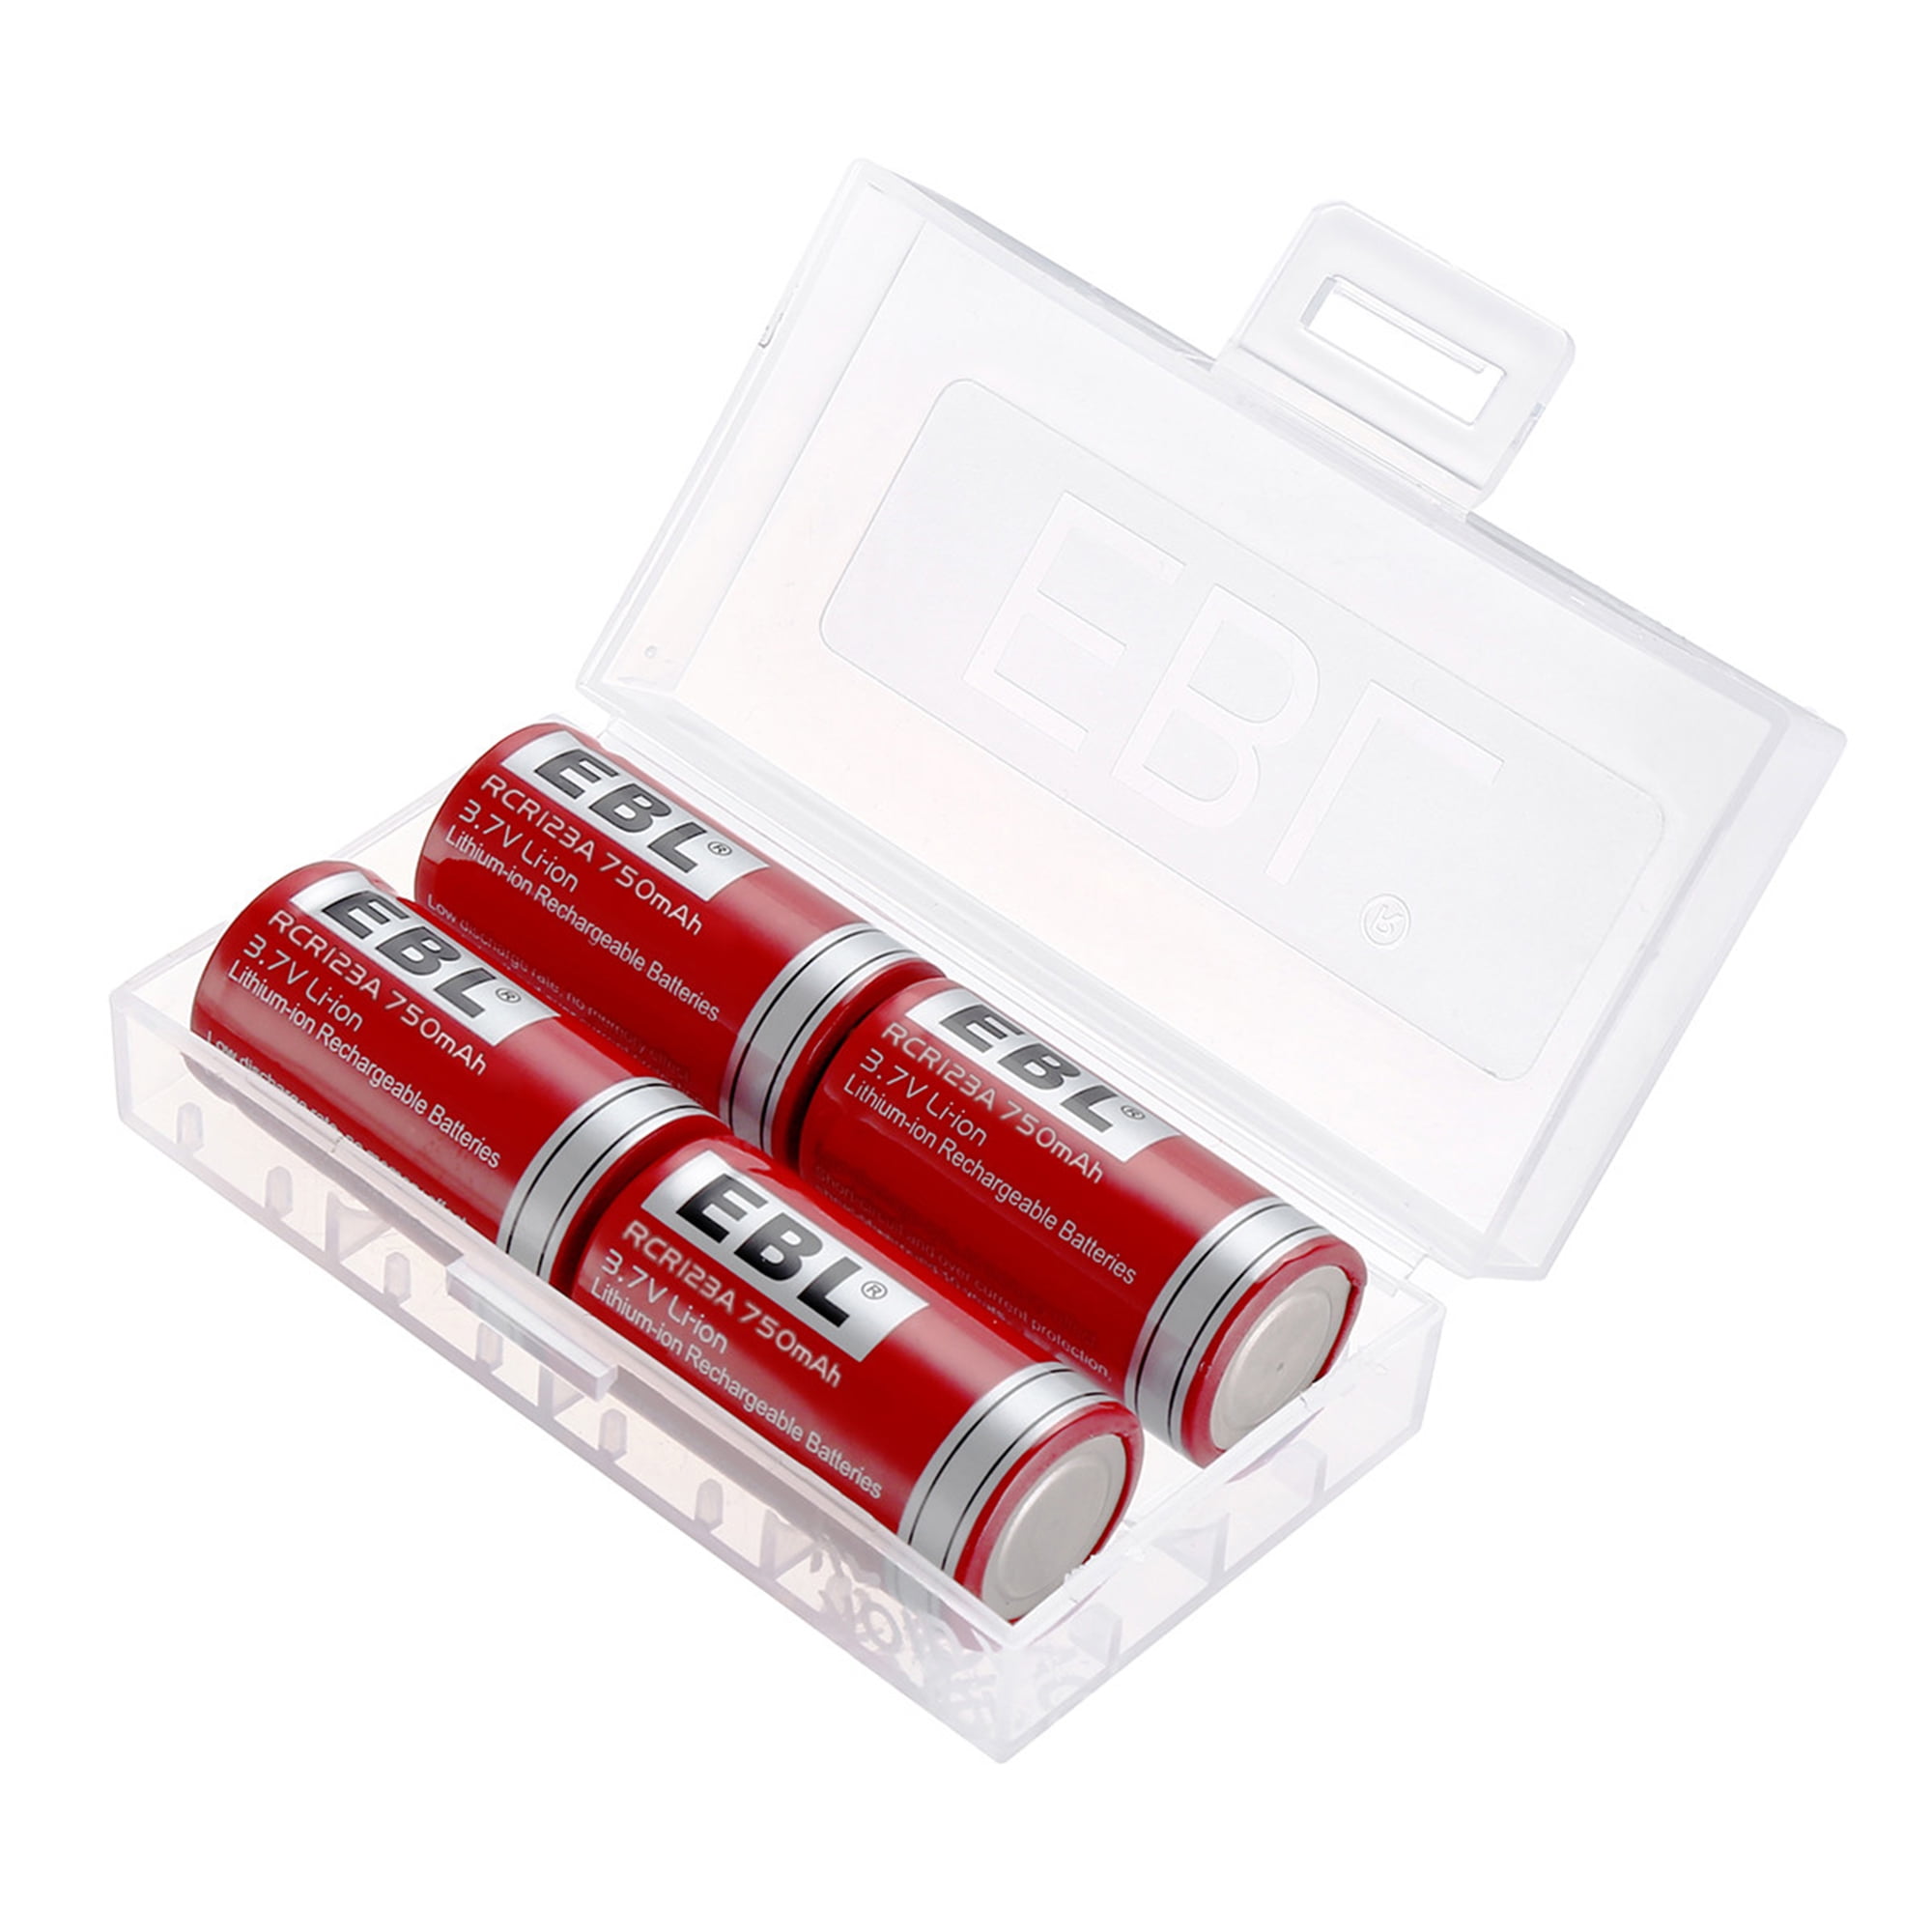 EBL 14500 Lithium-Ion Rechargeable Batteries 800mAh 3.7V